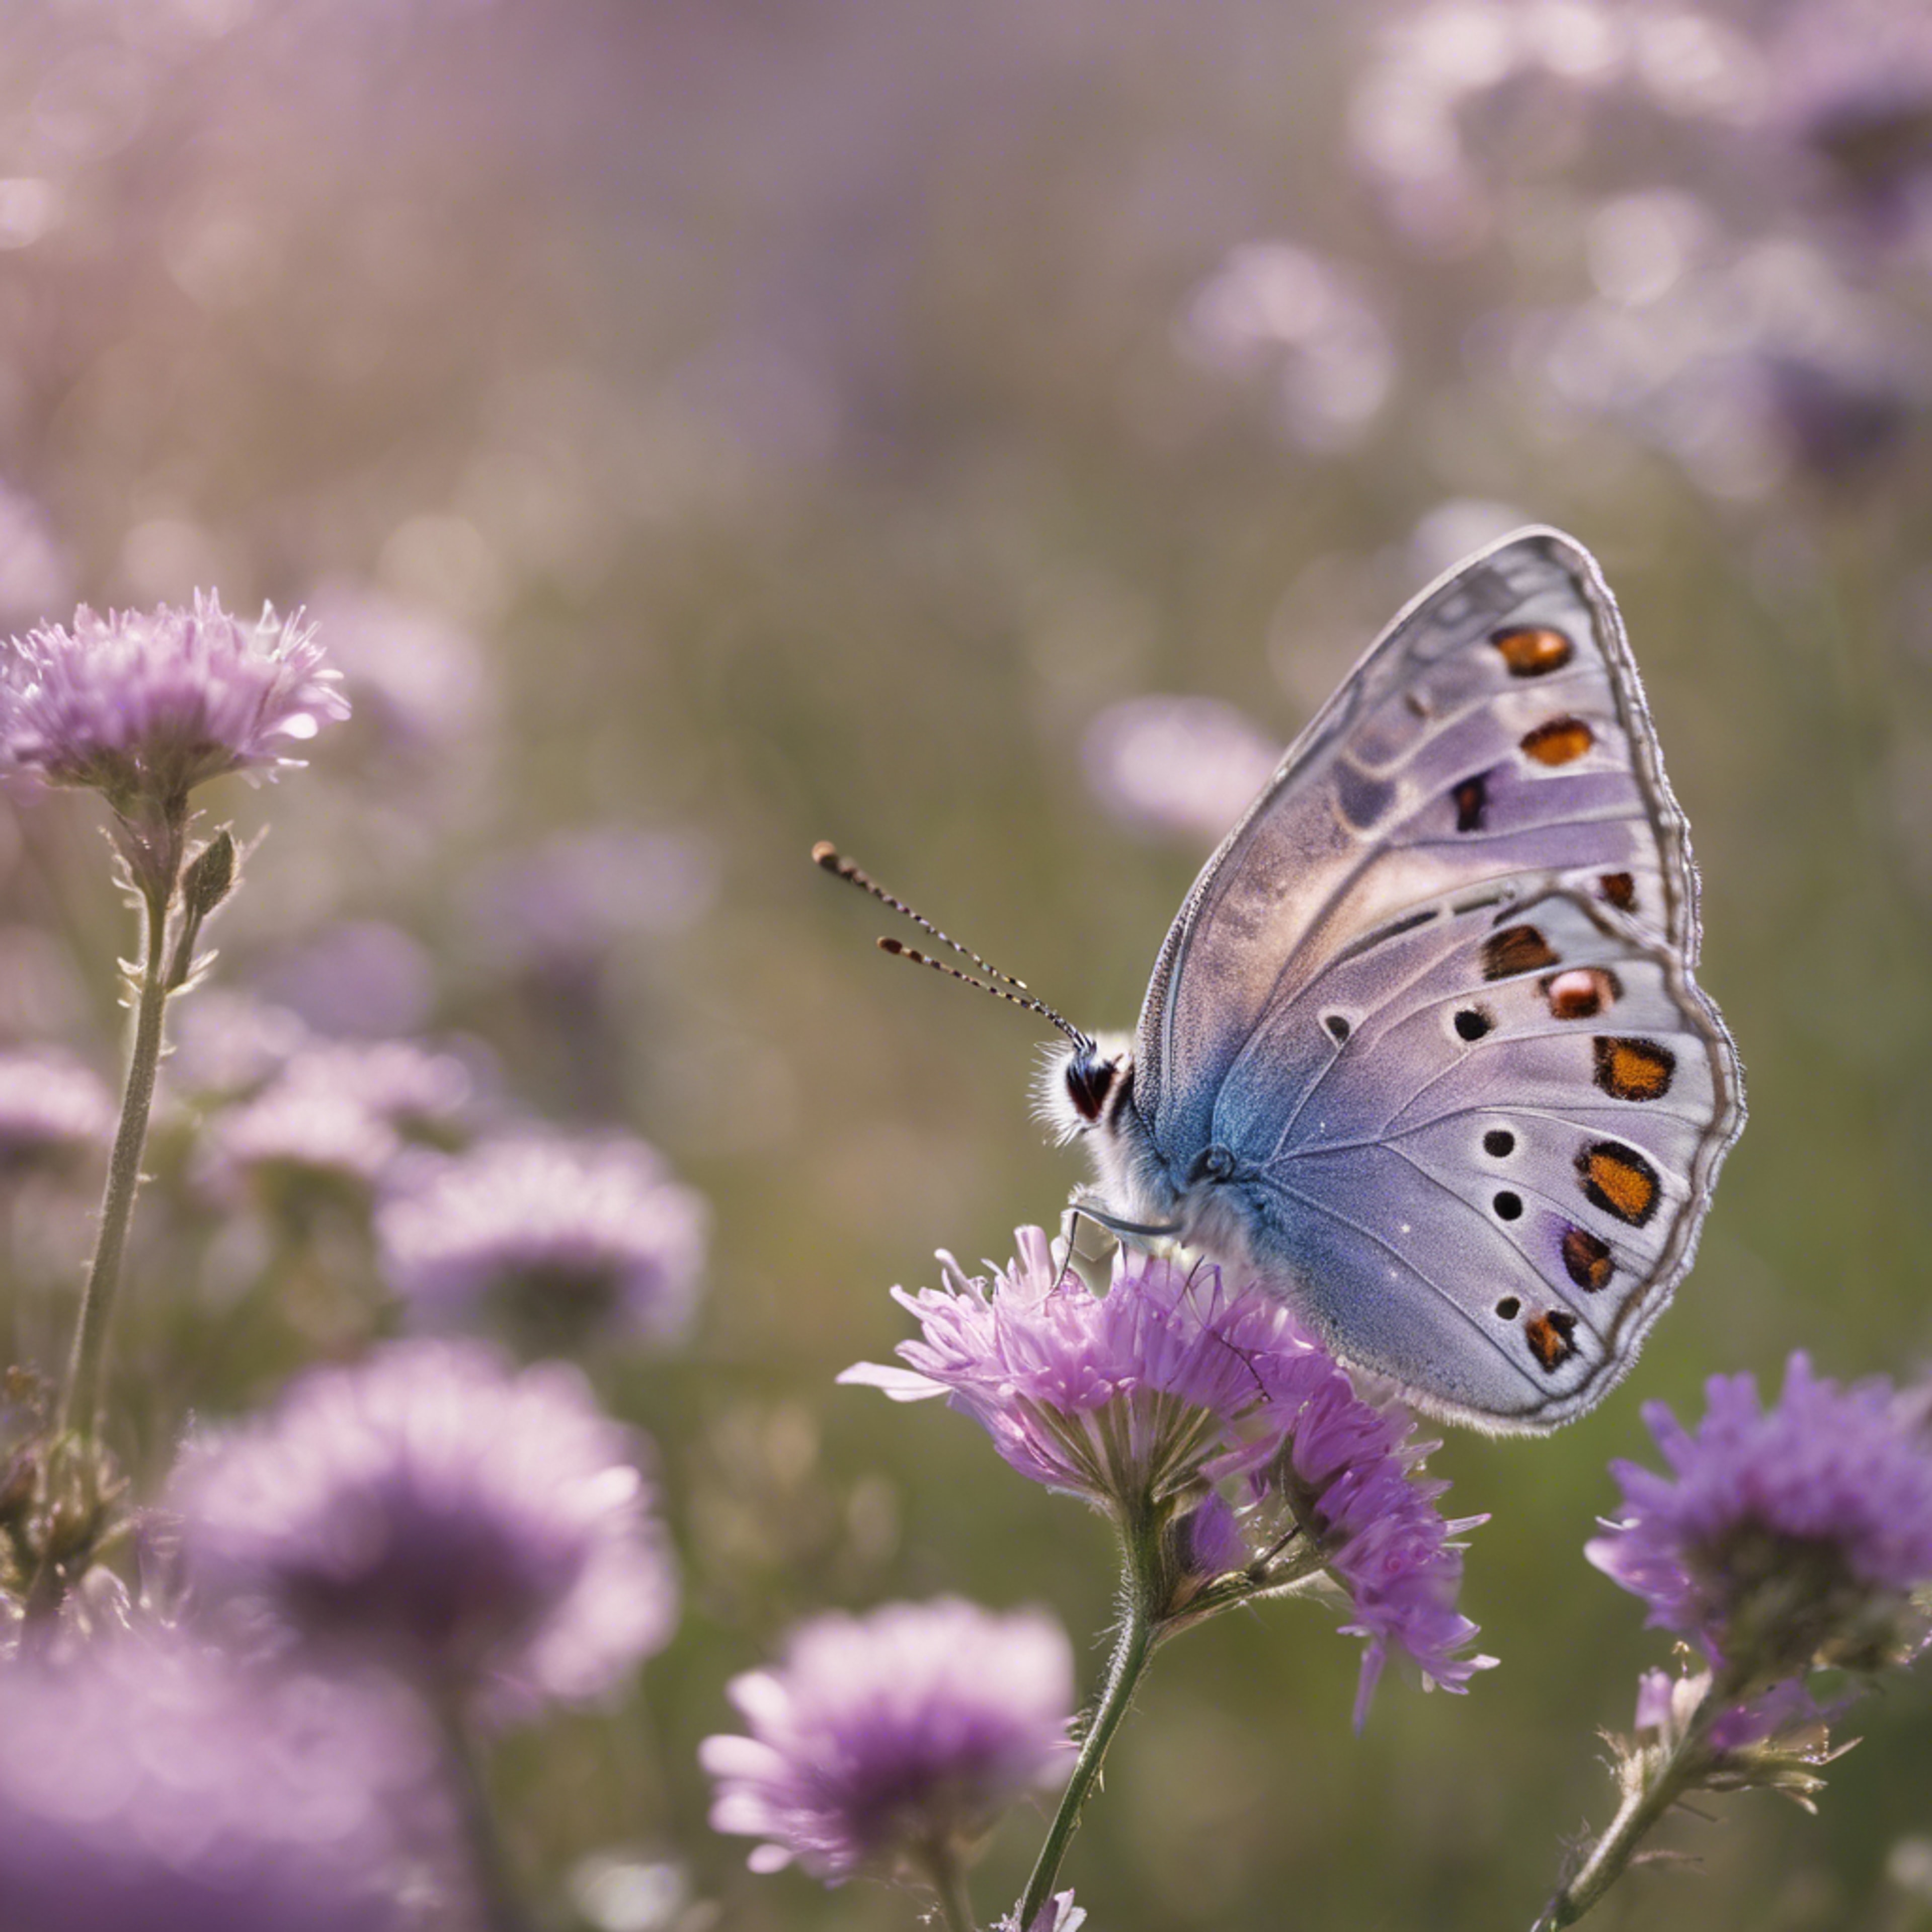 A playful light purple butterfly fluttering freely amidst wildflowers. Tapeta[992811f2a8e14925b1c6]